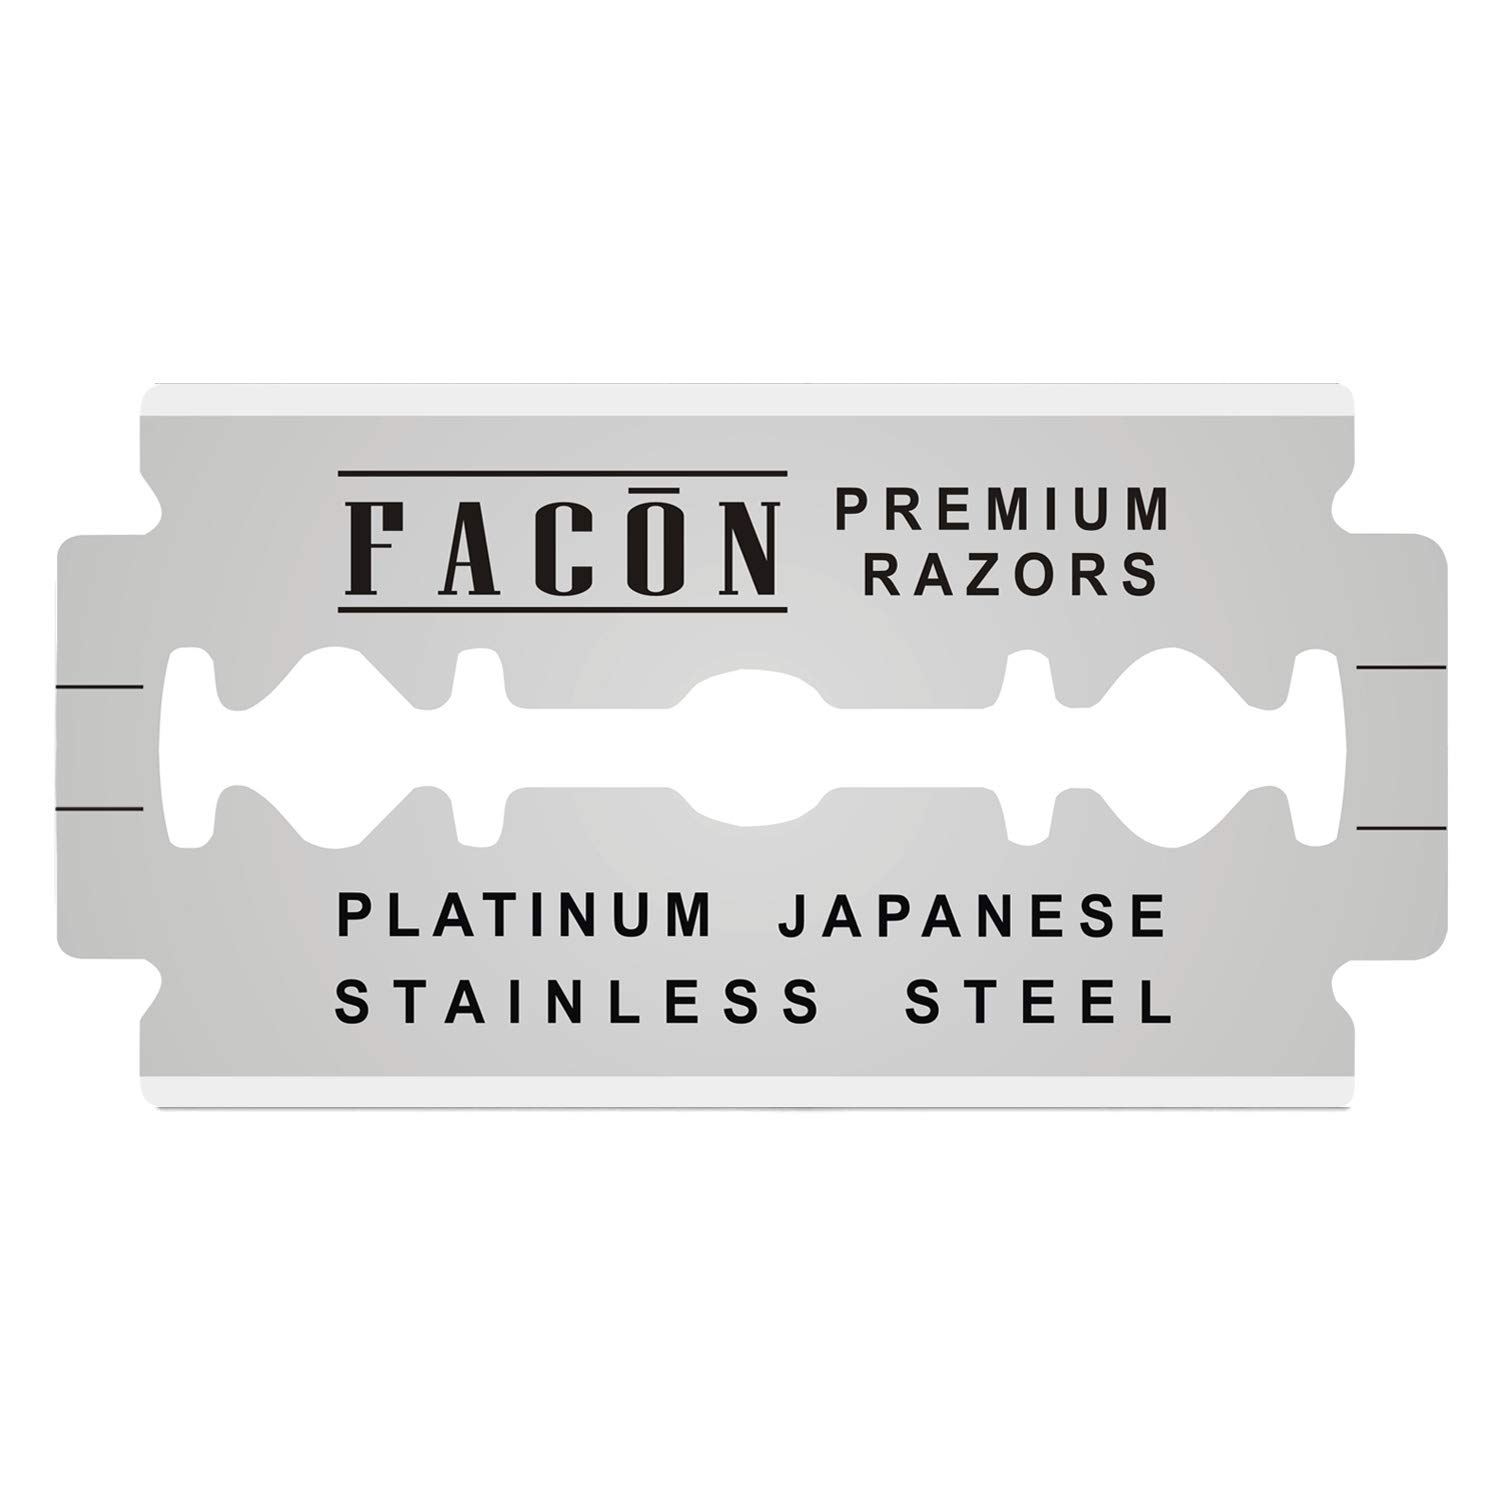 Facón Platinum Japanese Stainless Steel Double Edge Razor Blades